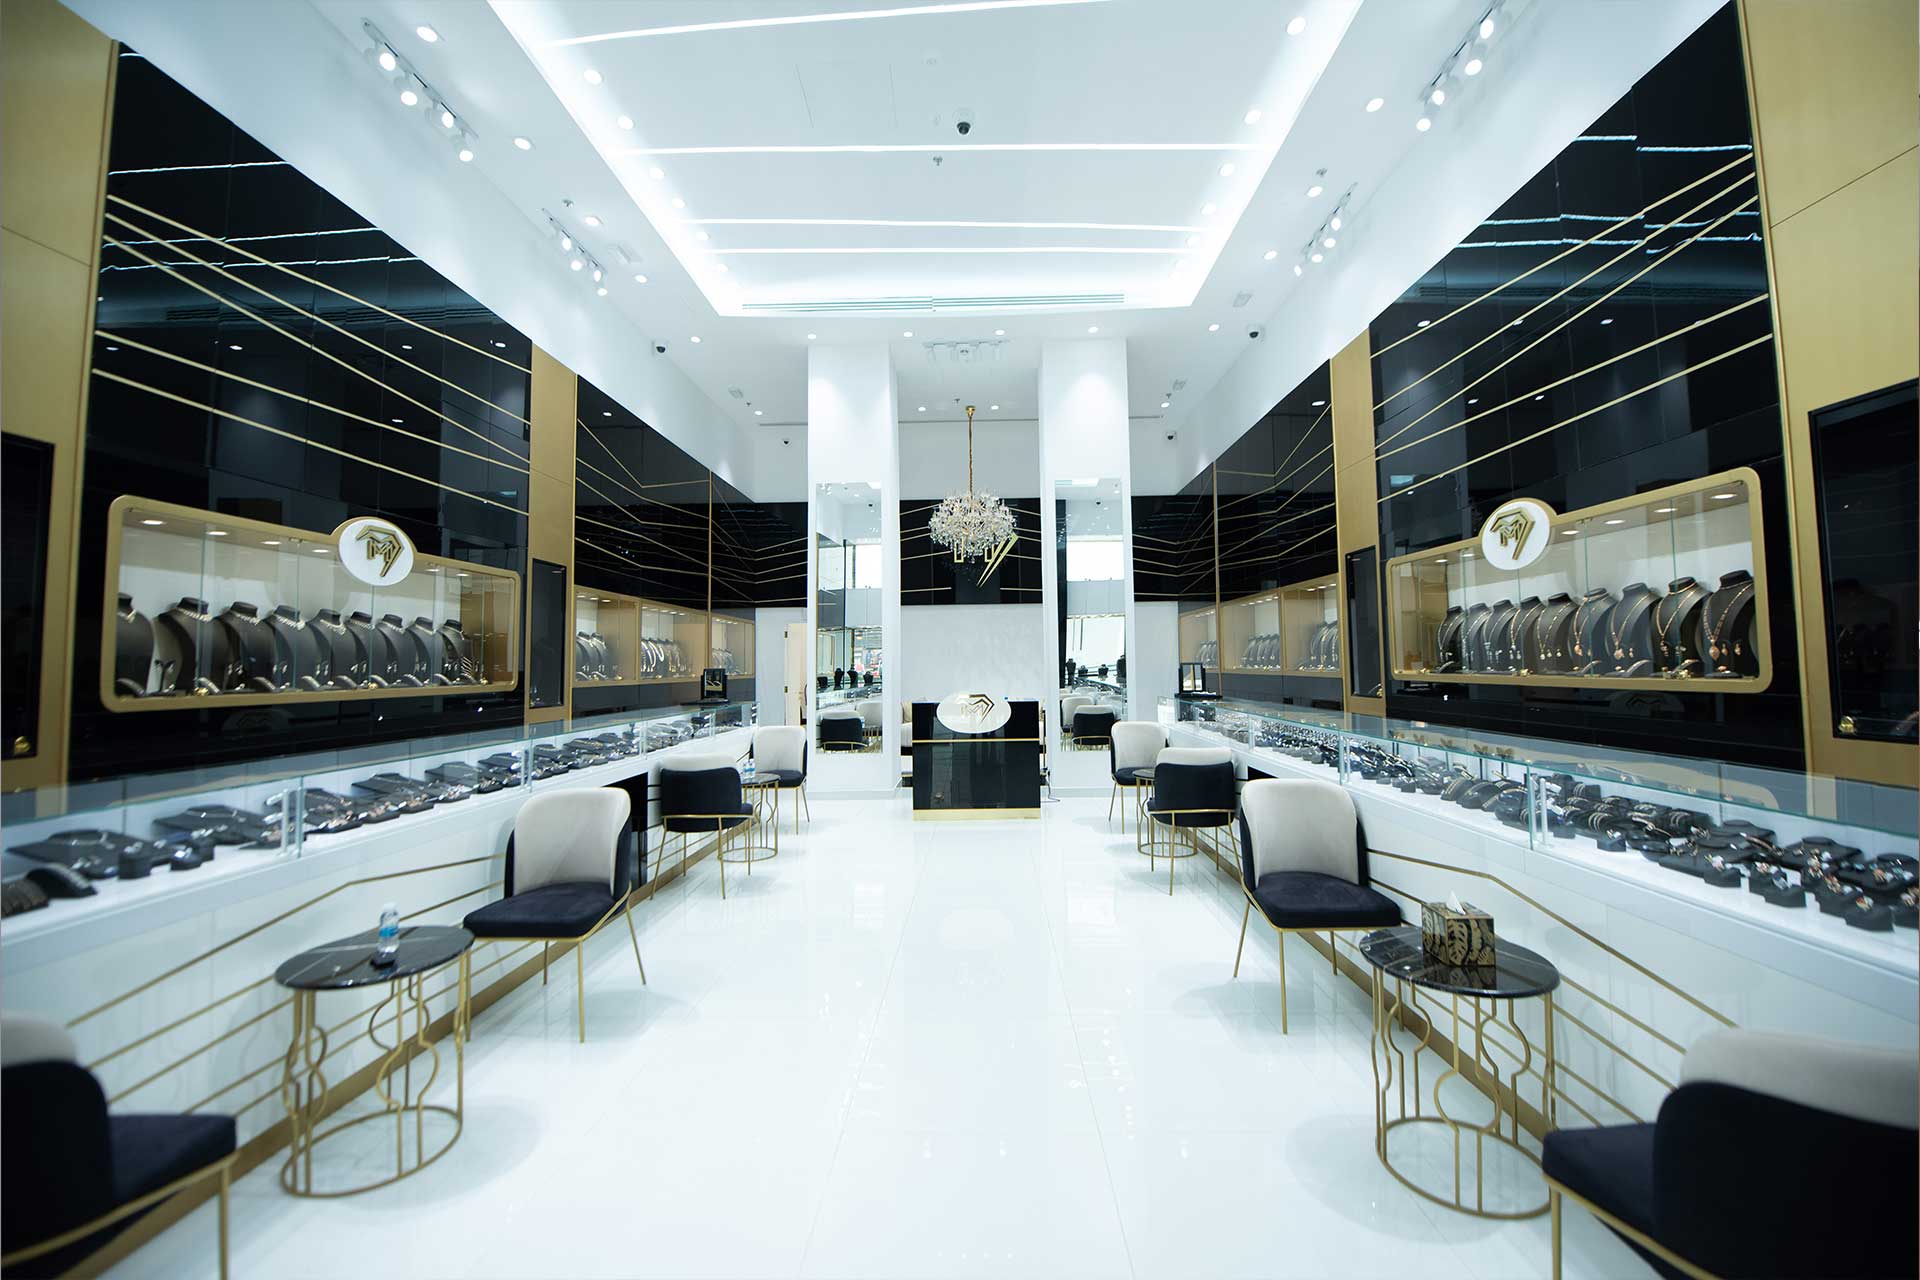 Luxurious Interior of Mattar Jewelers Shop, Vendome Mall, Qatar - Image 3